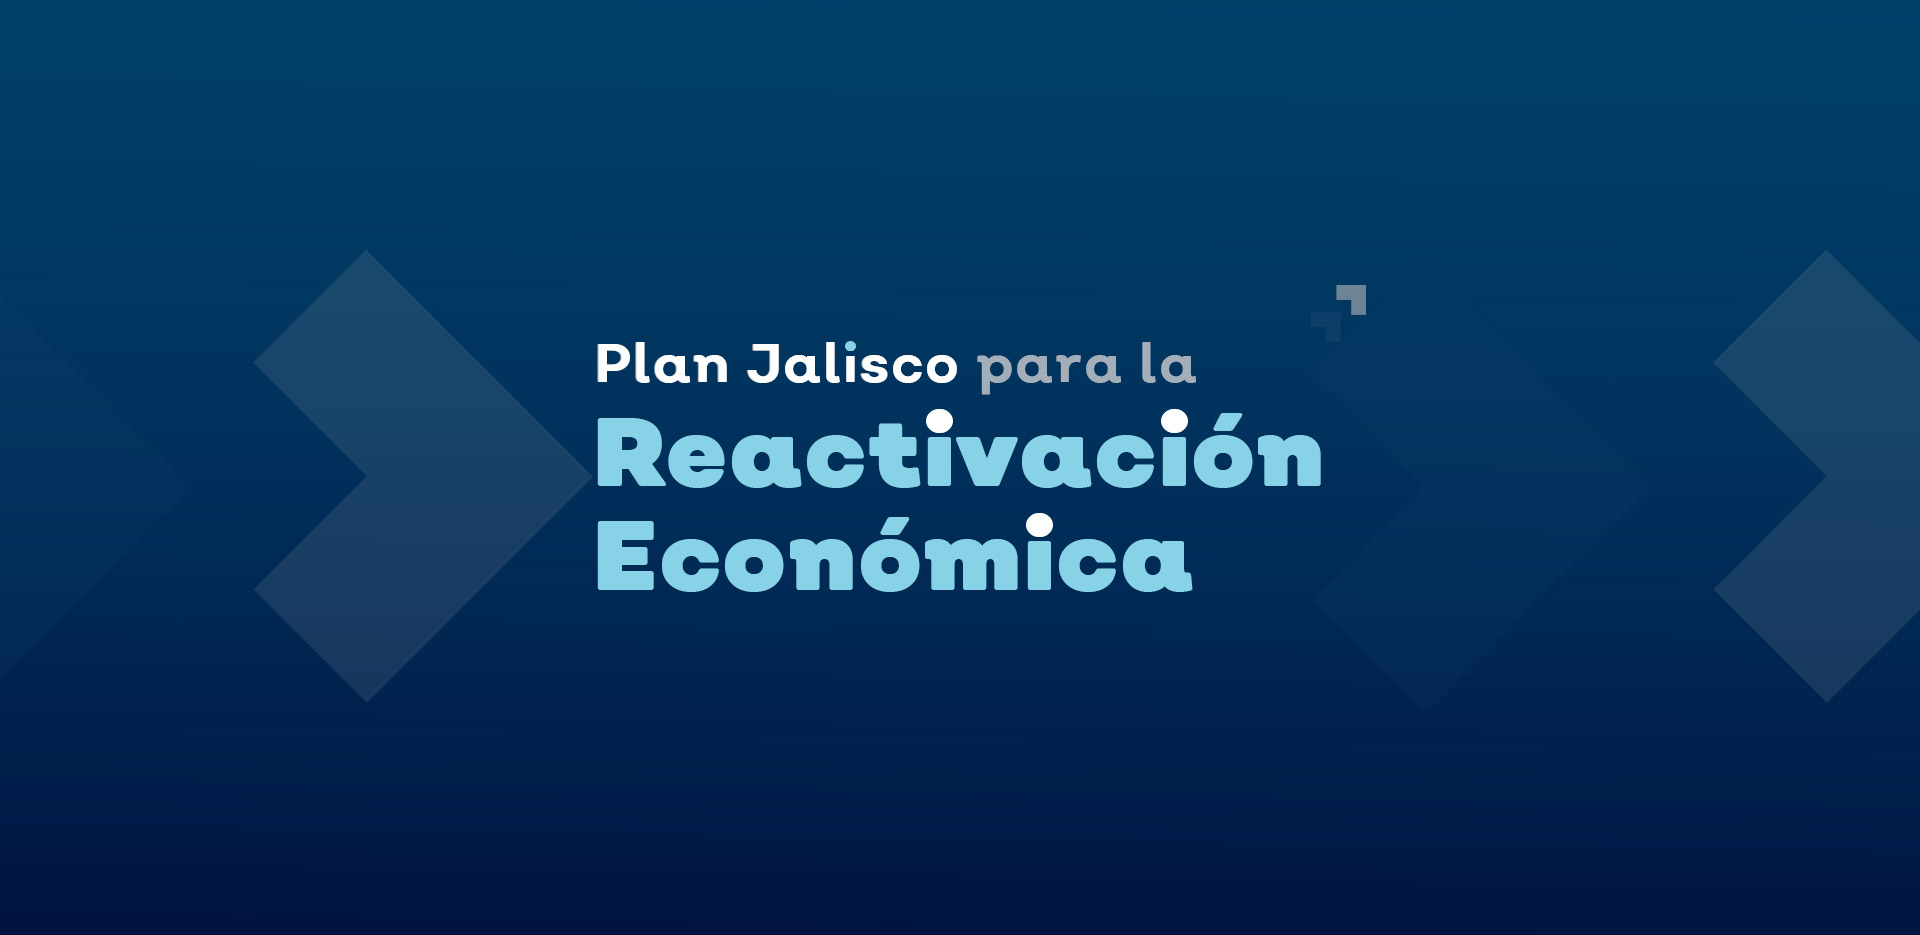 (c) Reactivacioneconomica.jalisco.gob.mx